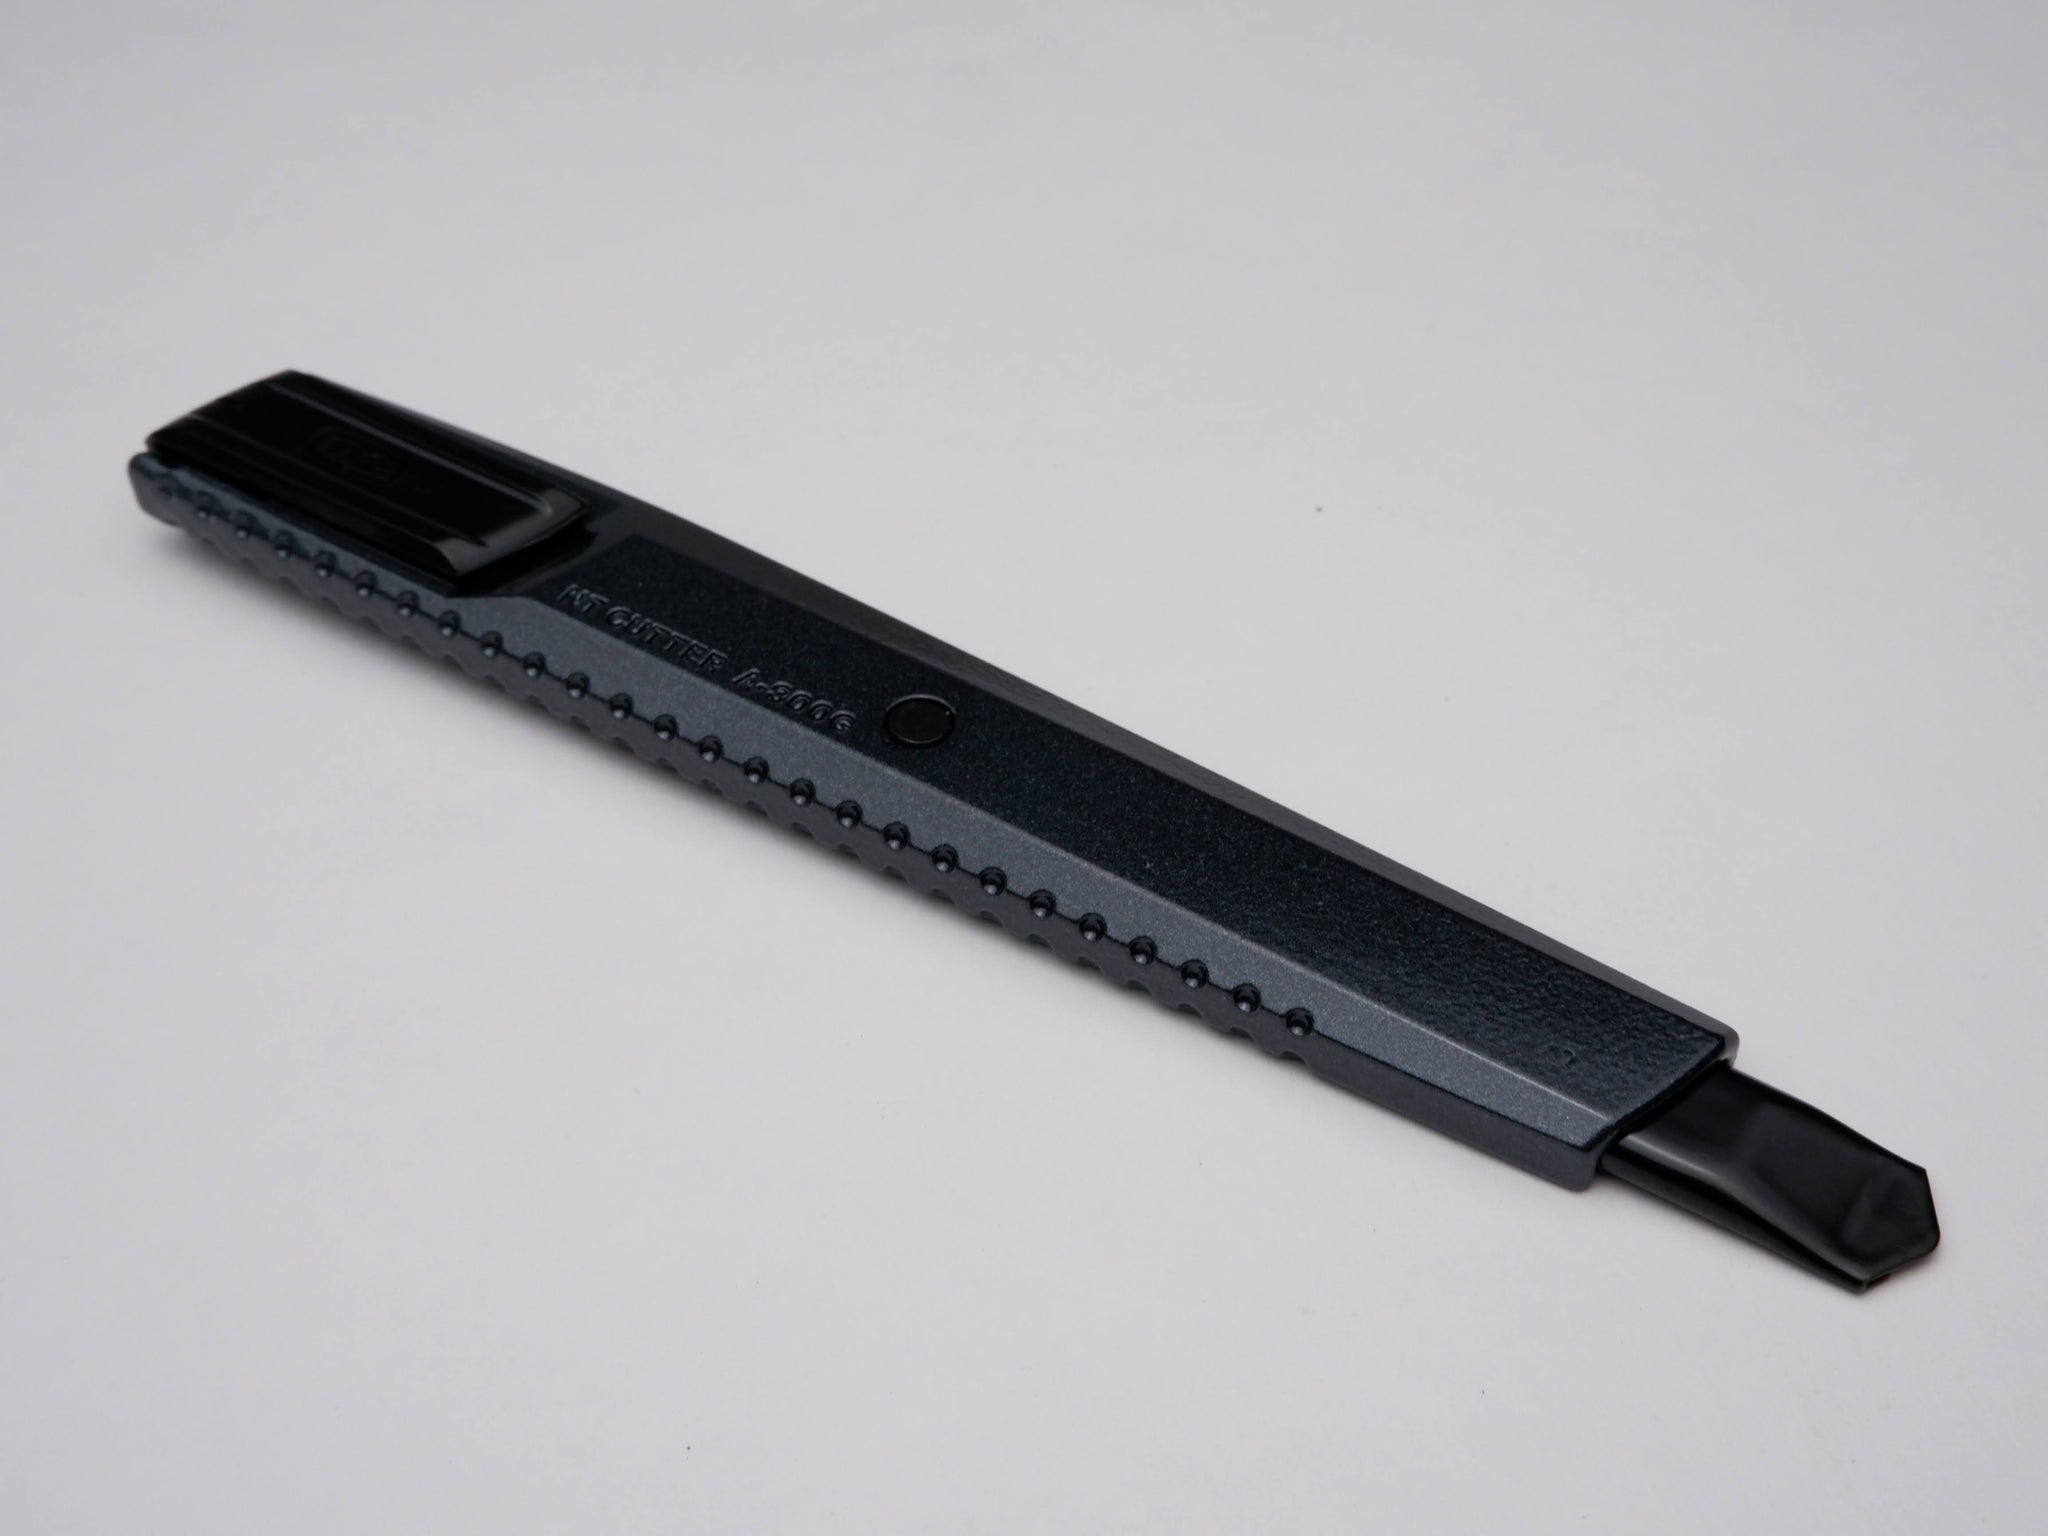  NT Cutter Premium Evolution PMG series Aluminum Die-Cast Grip  Auto-Lock Utility Knife, With 30-Degree Extra Sharp Black Blade (PMGA-EVO2)  : Tools & Home Improvement